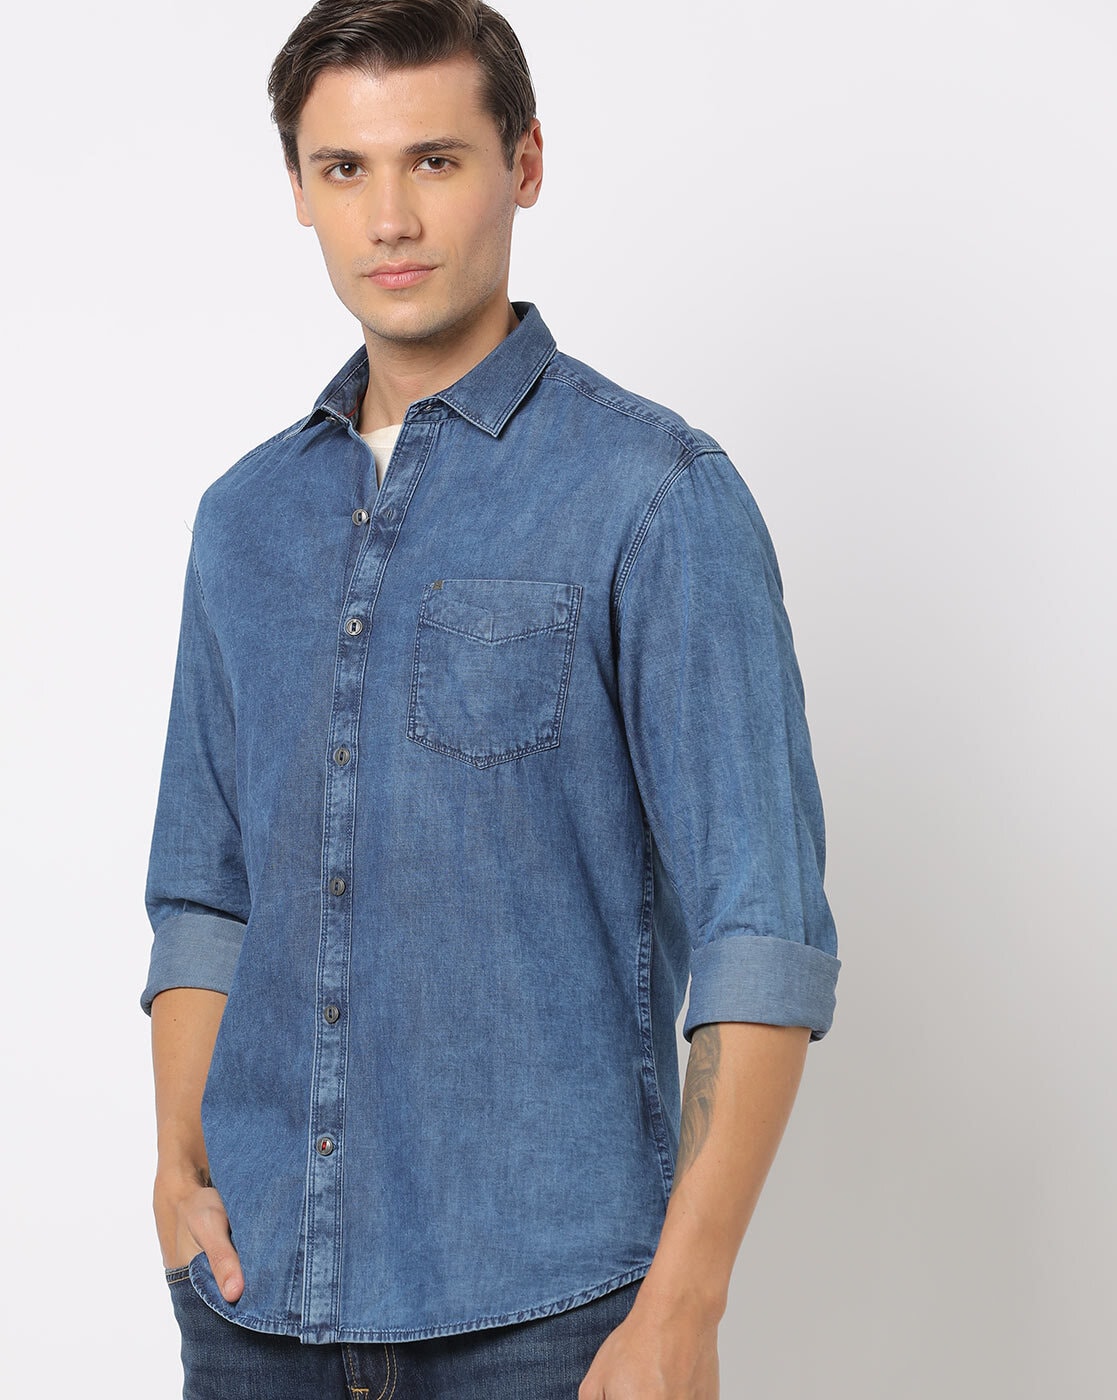 Buy Indigo Blue Denim Plain Shirt Online at Muftijeans